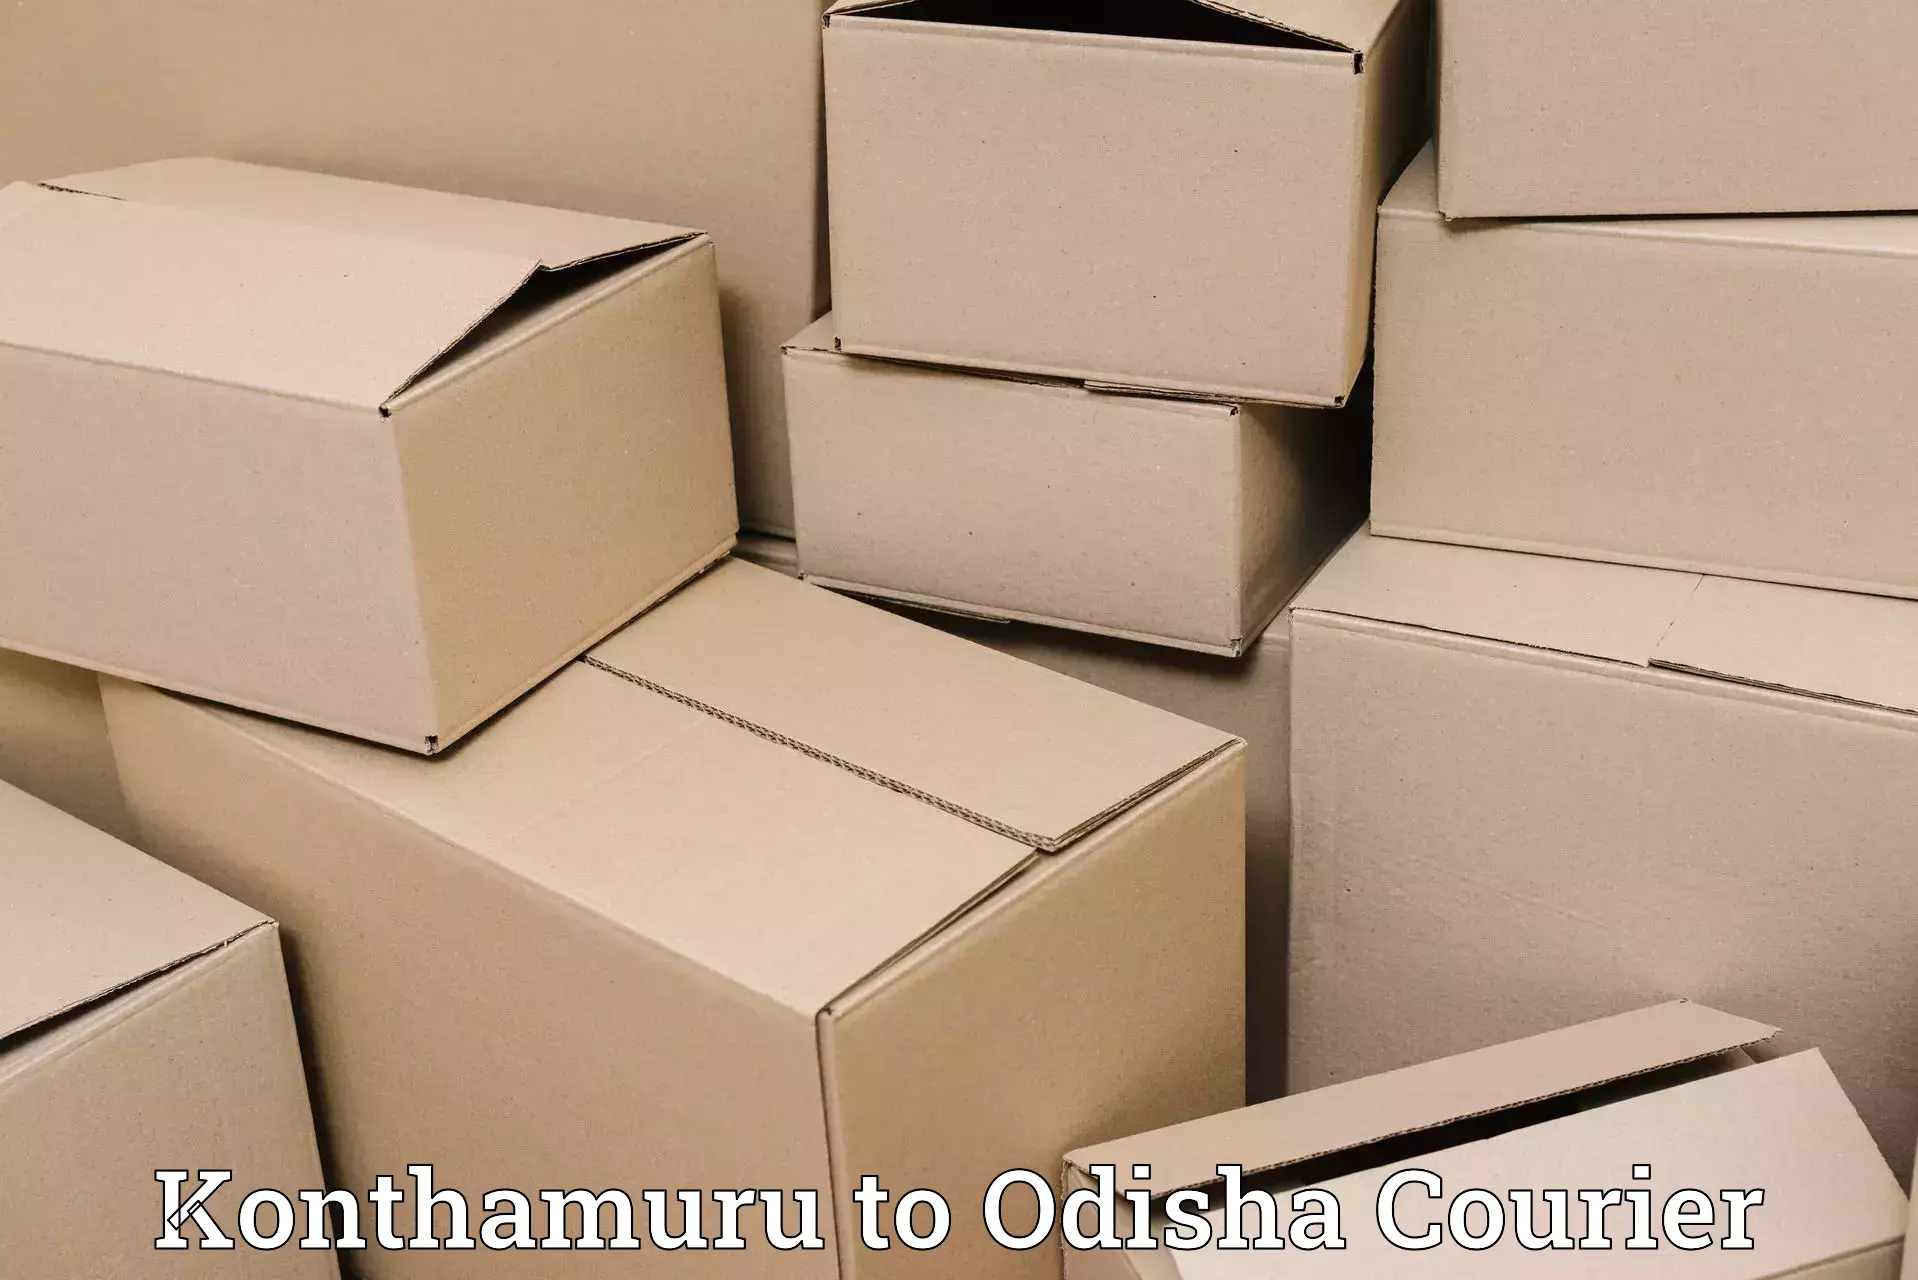 Reliable courier services Konthamuru to Binjharpur